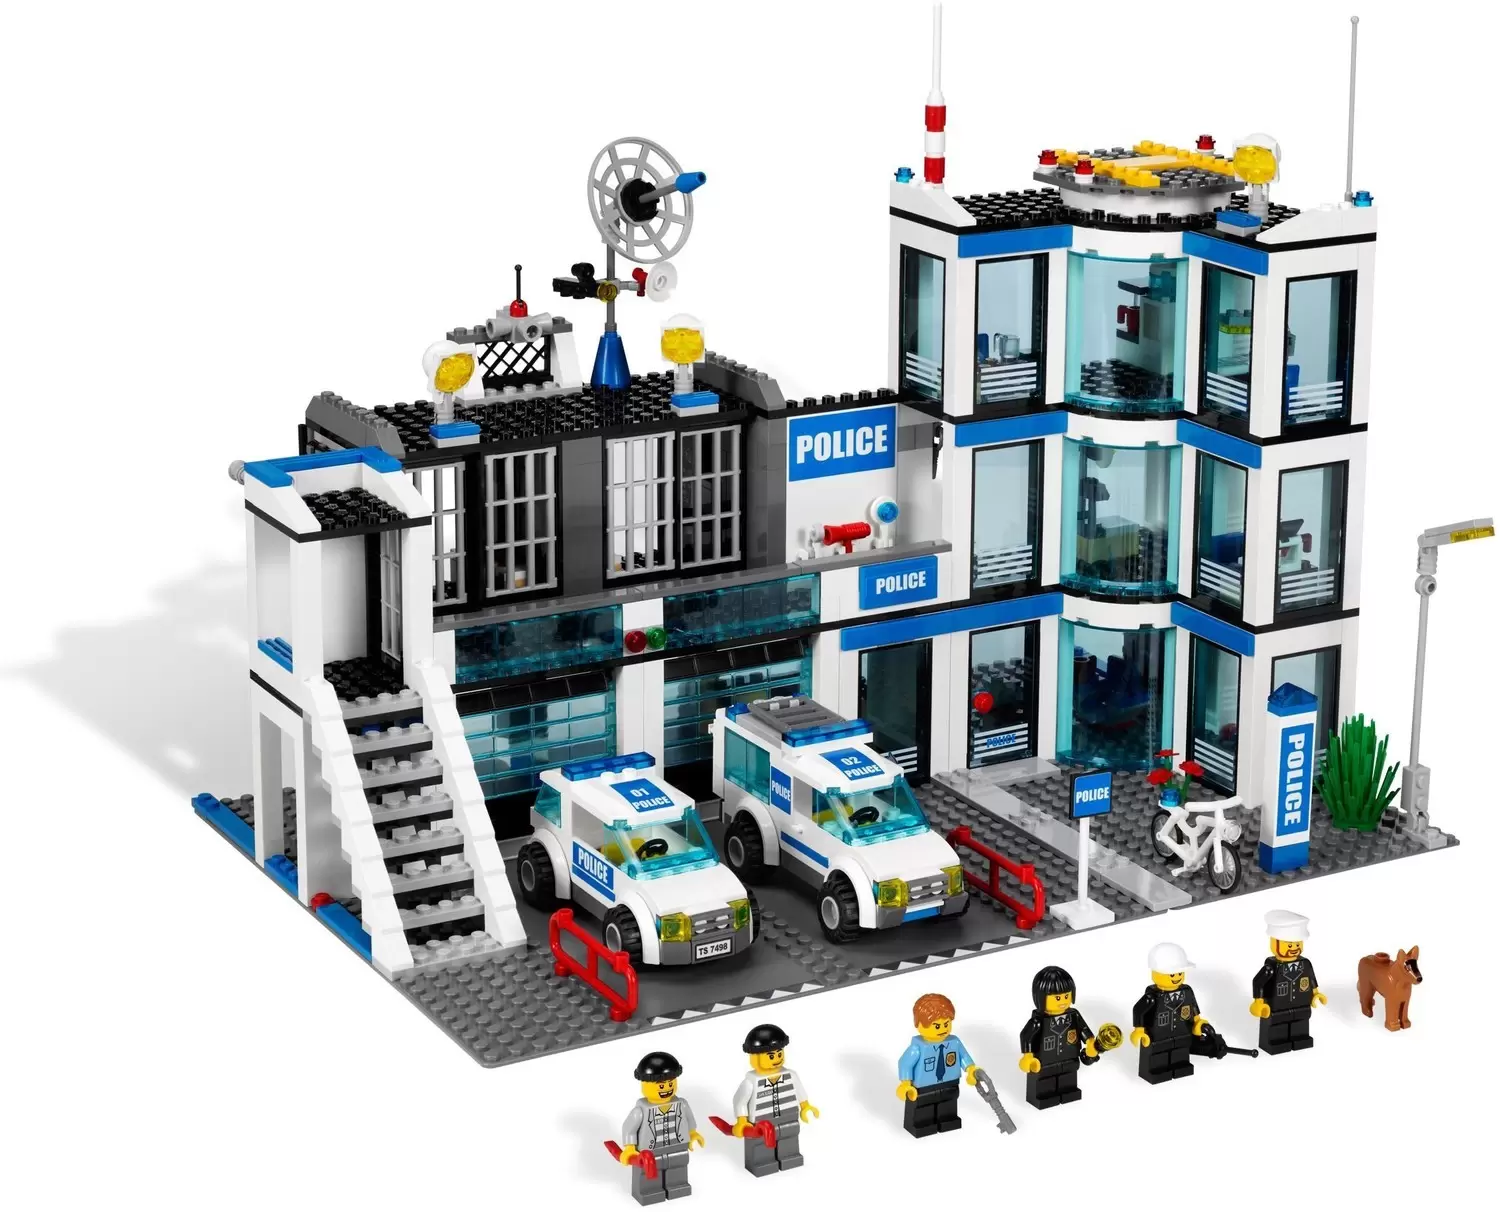 LEGO CITY - Police Station